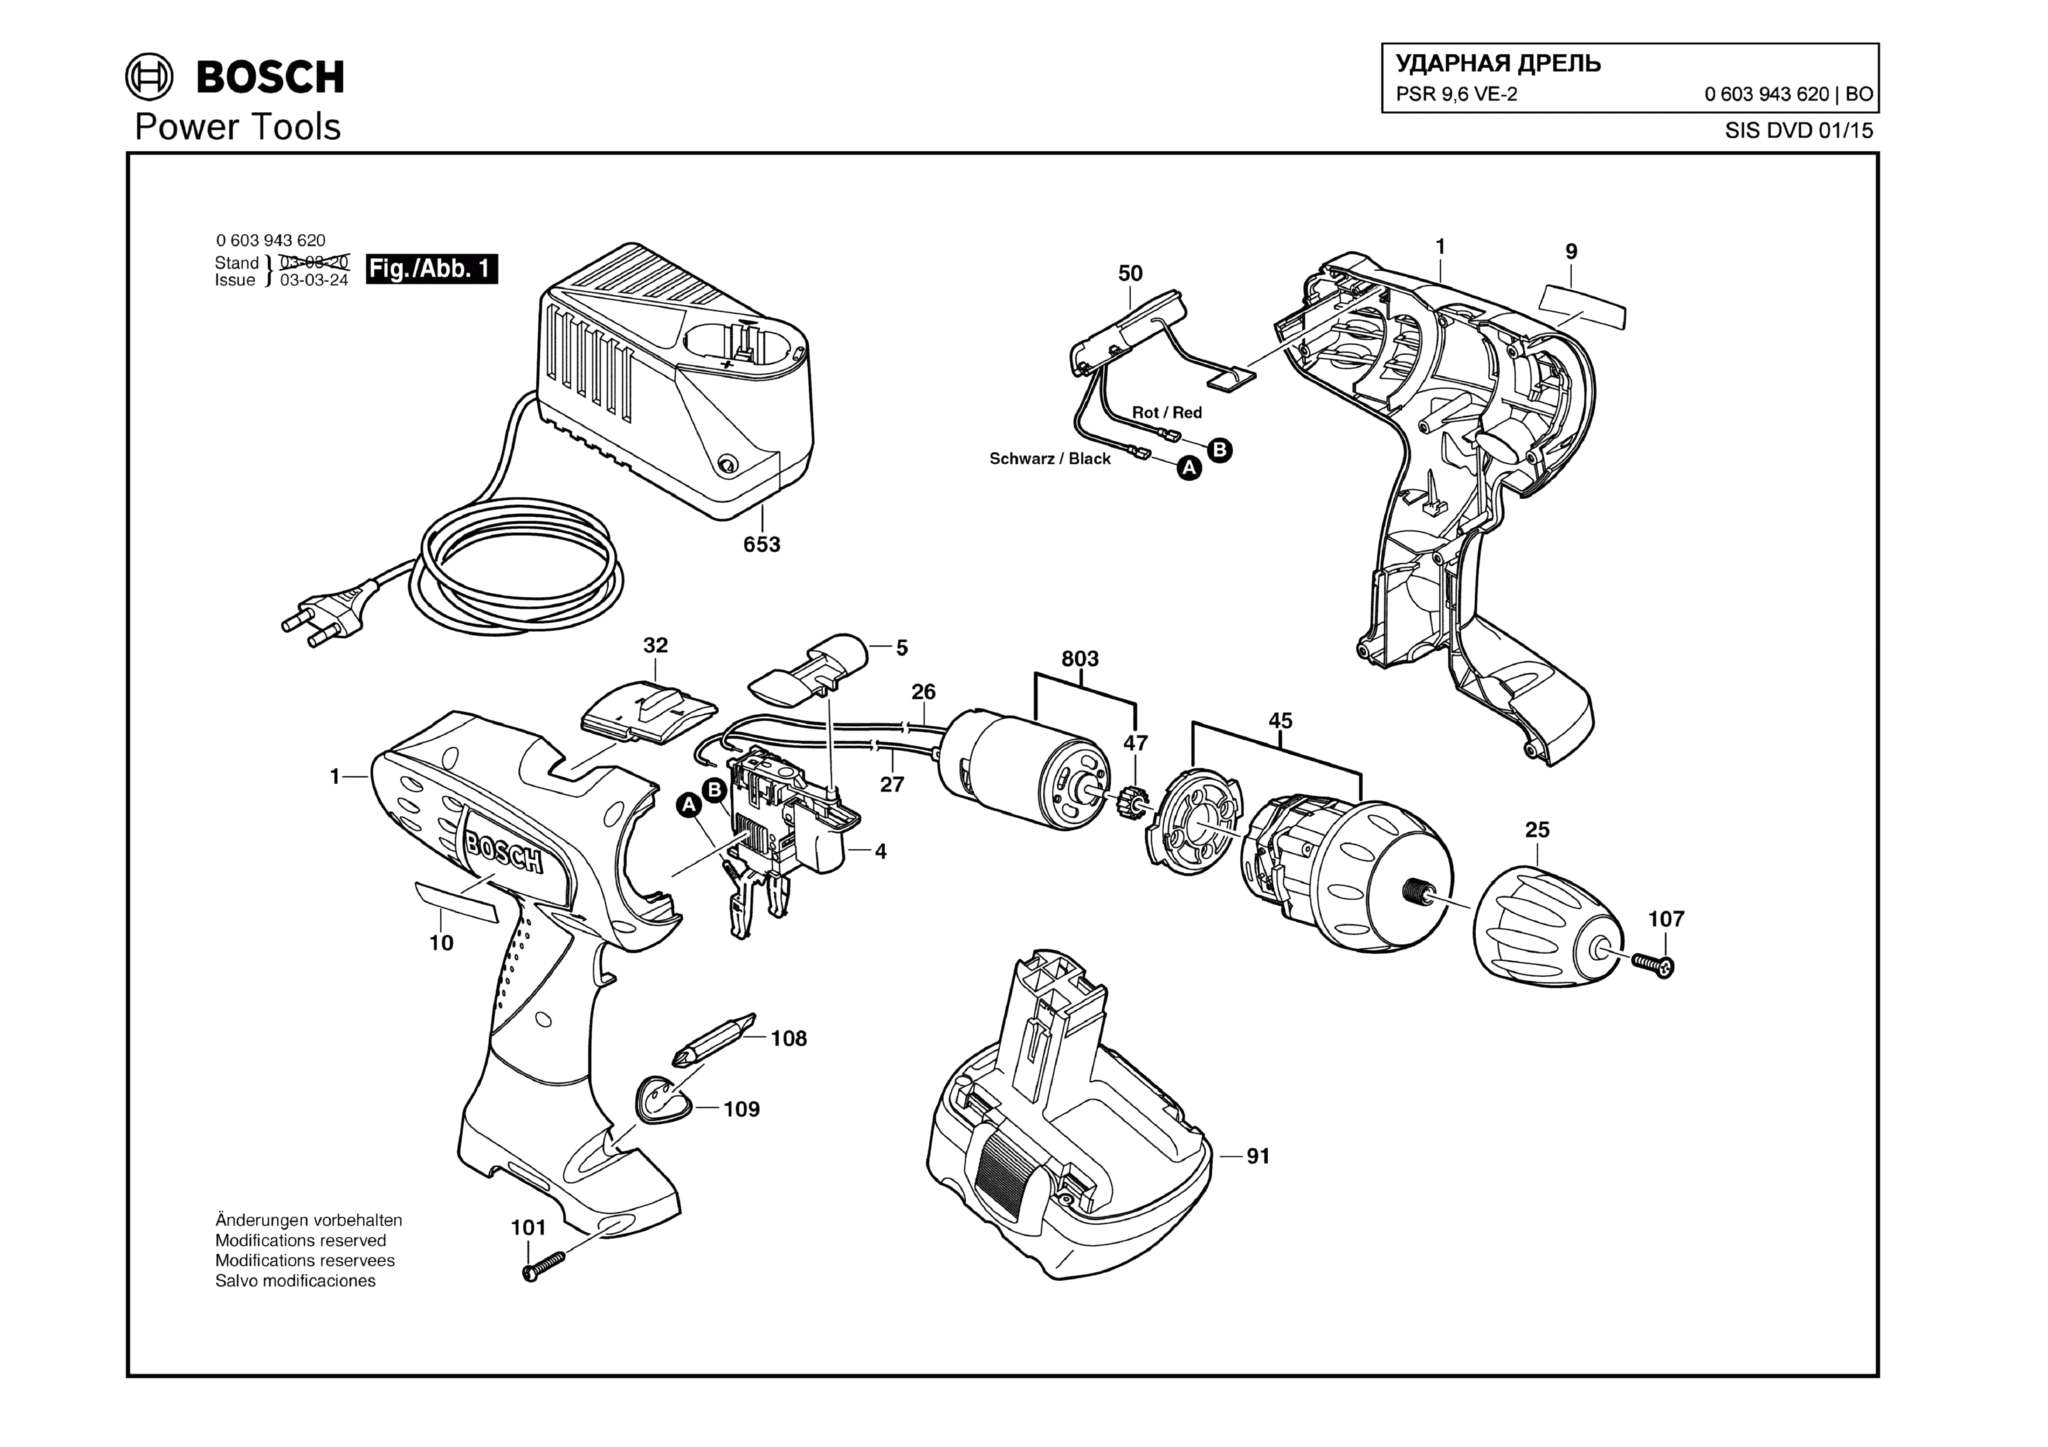 Запчасти, схема и деталировка Bosch PSR 9,6 VE-2 (ТИП 0603943620)